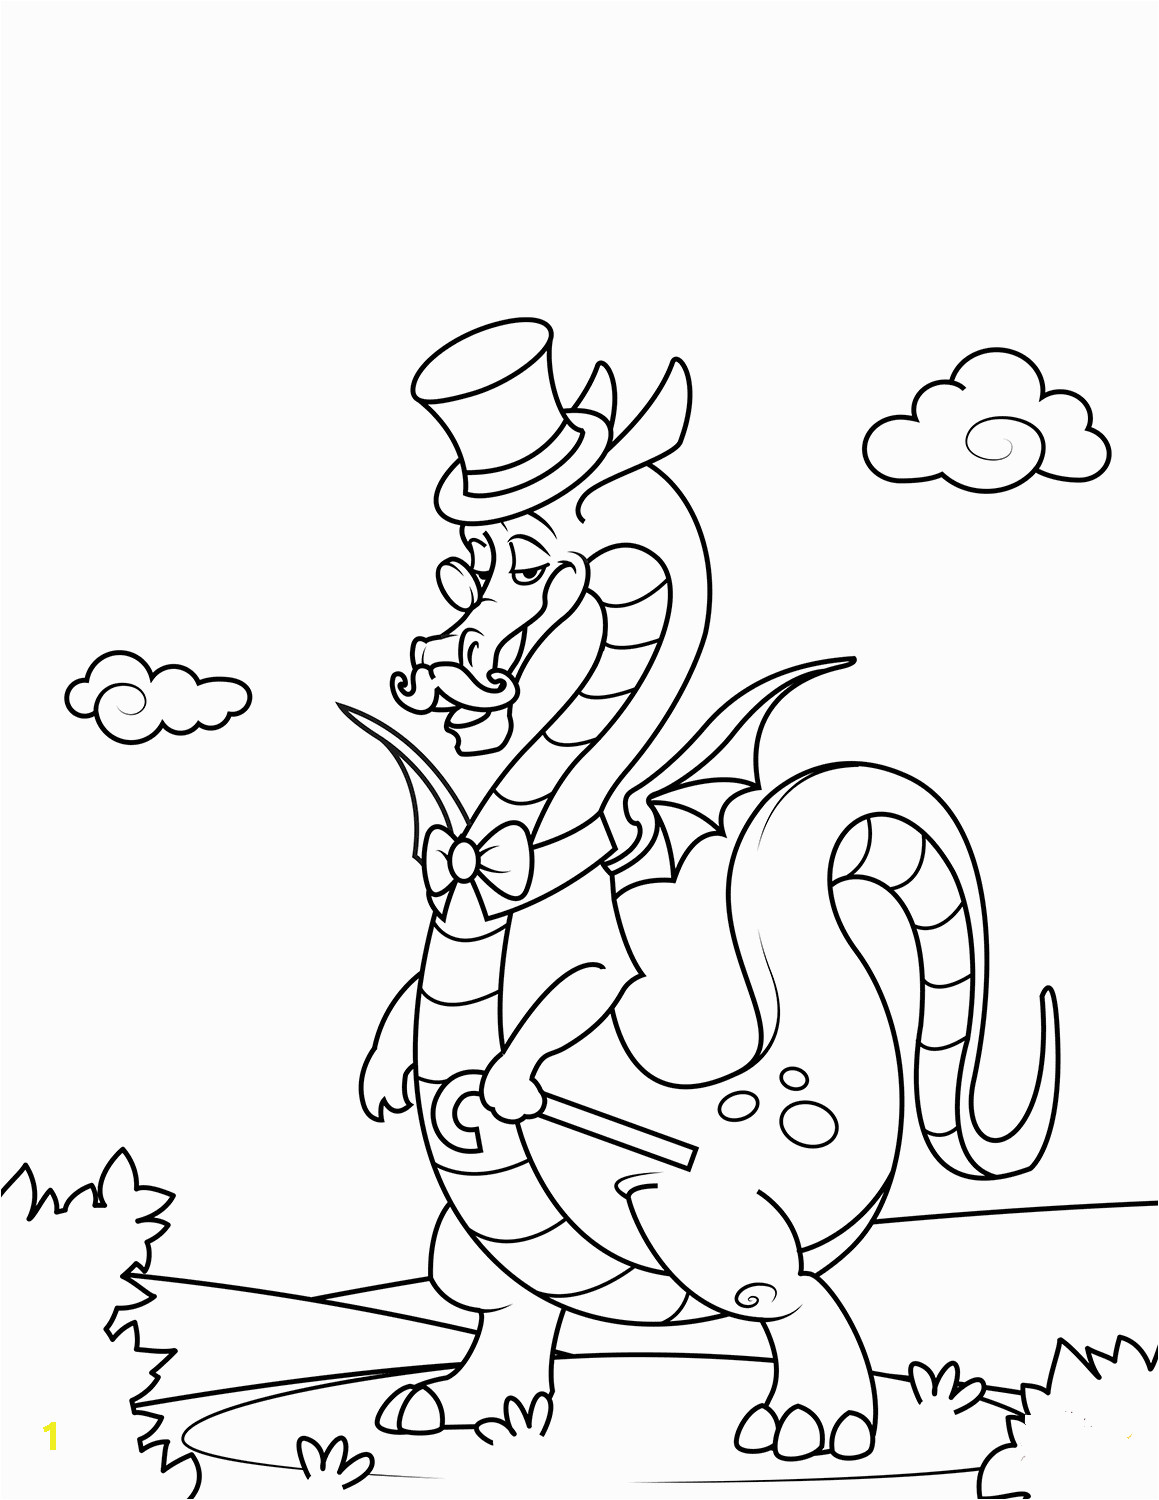 Gentleman Dragon Coloring Page